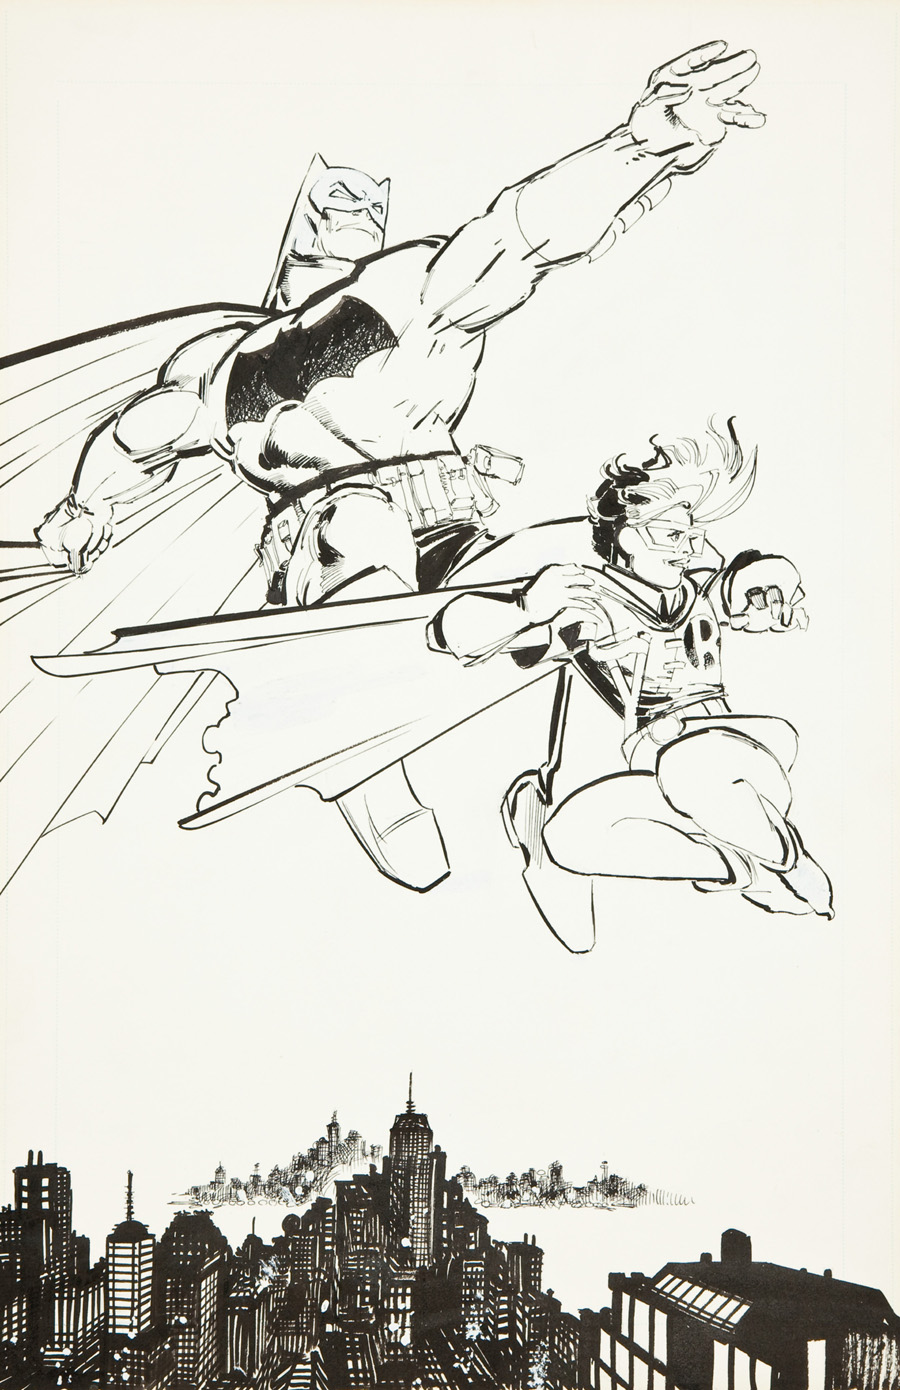 Cover art for “Batman: The Dark Knight Returns” #3, May 1986